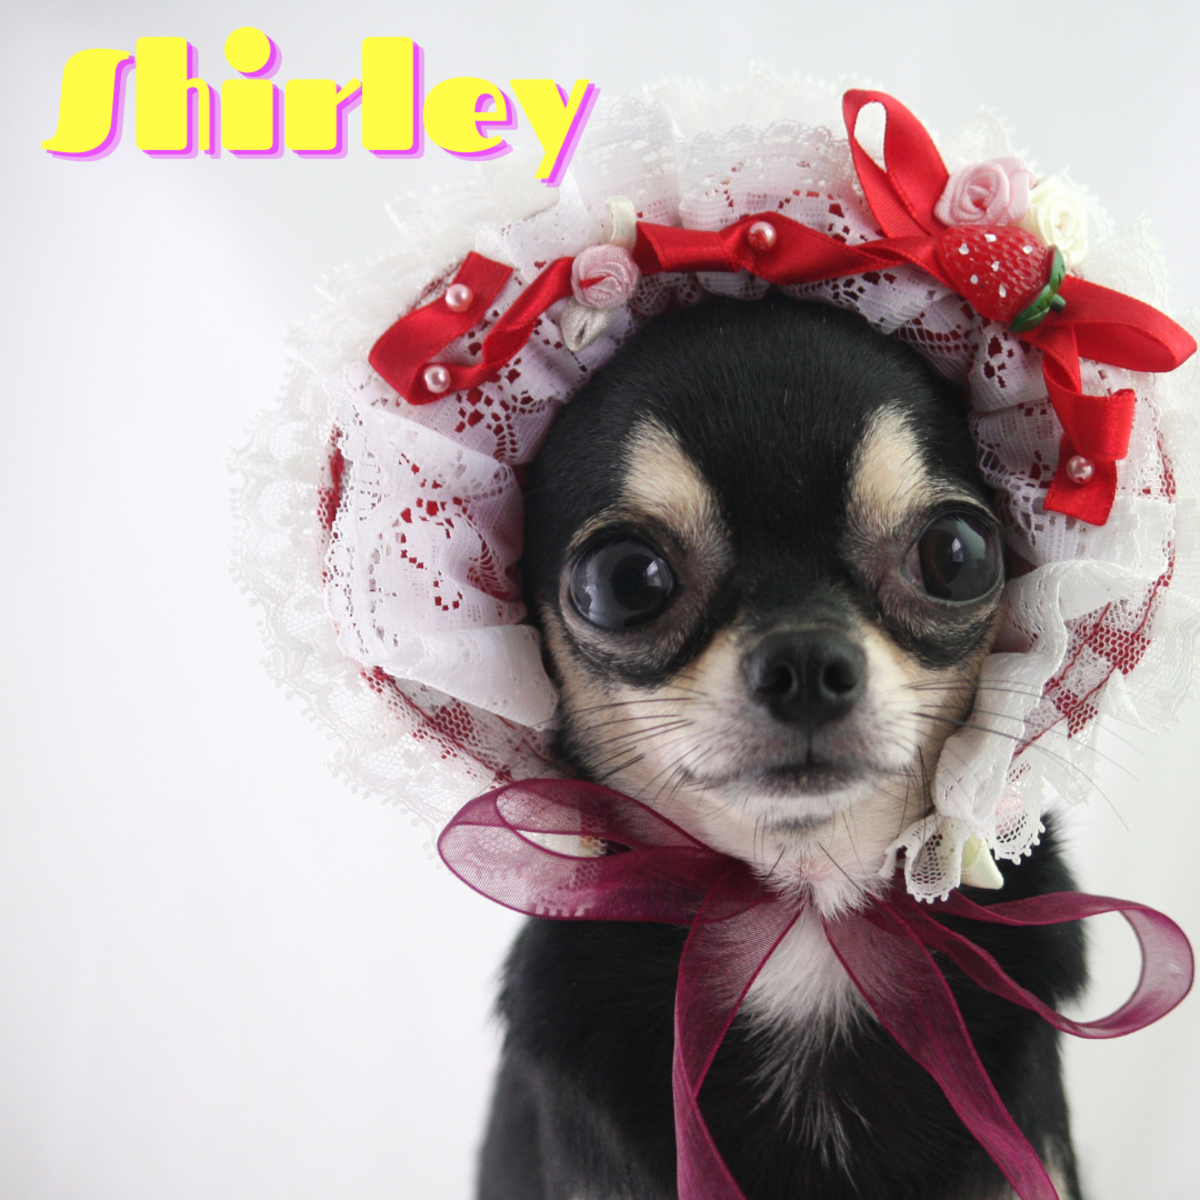 Consider a cute name like Shirley.